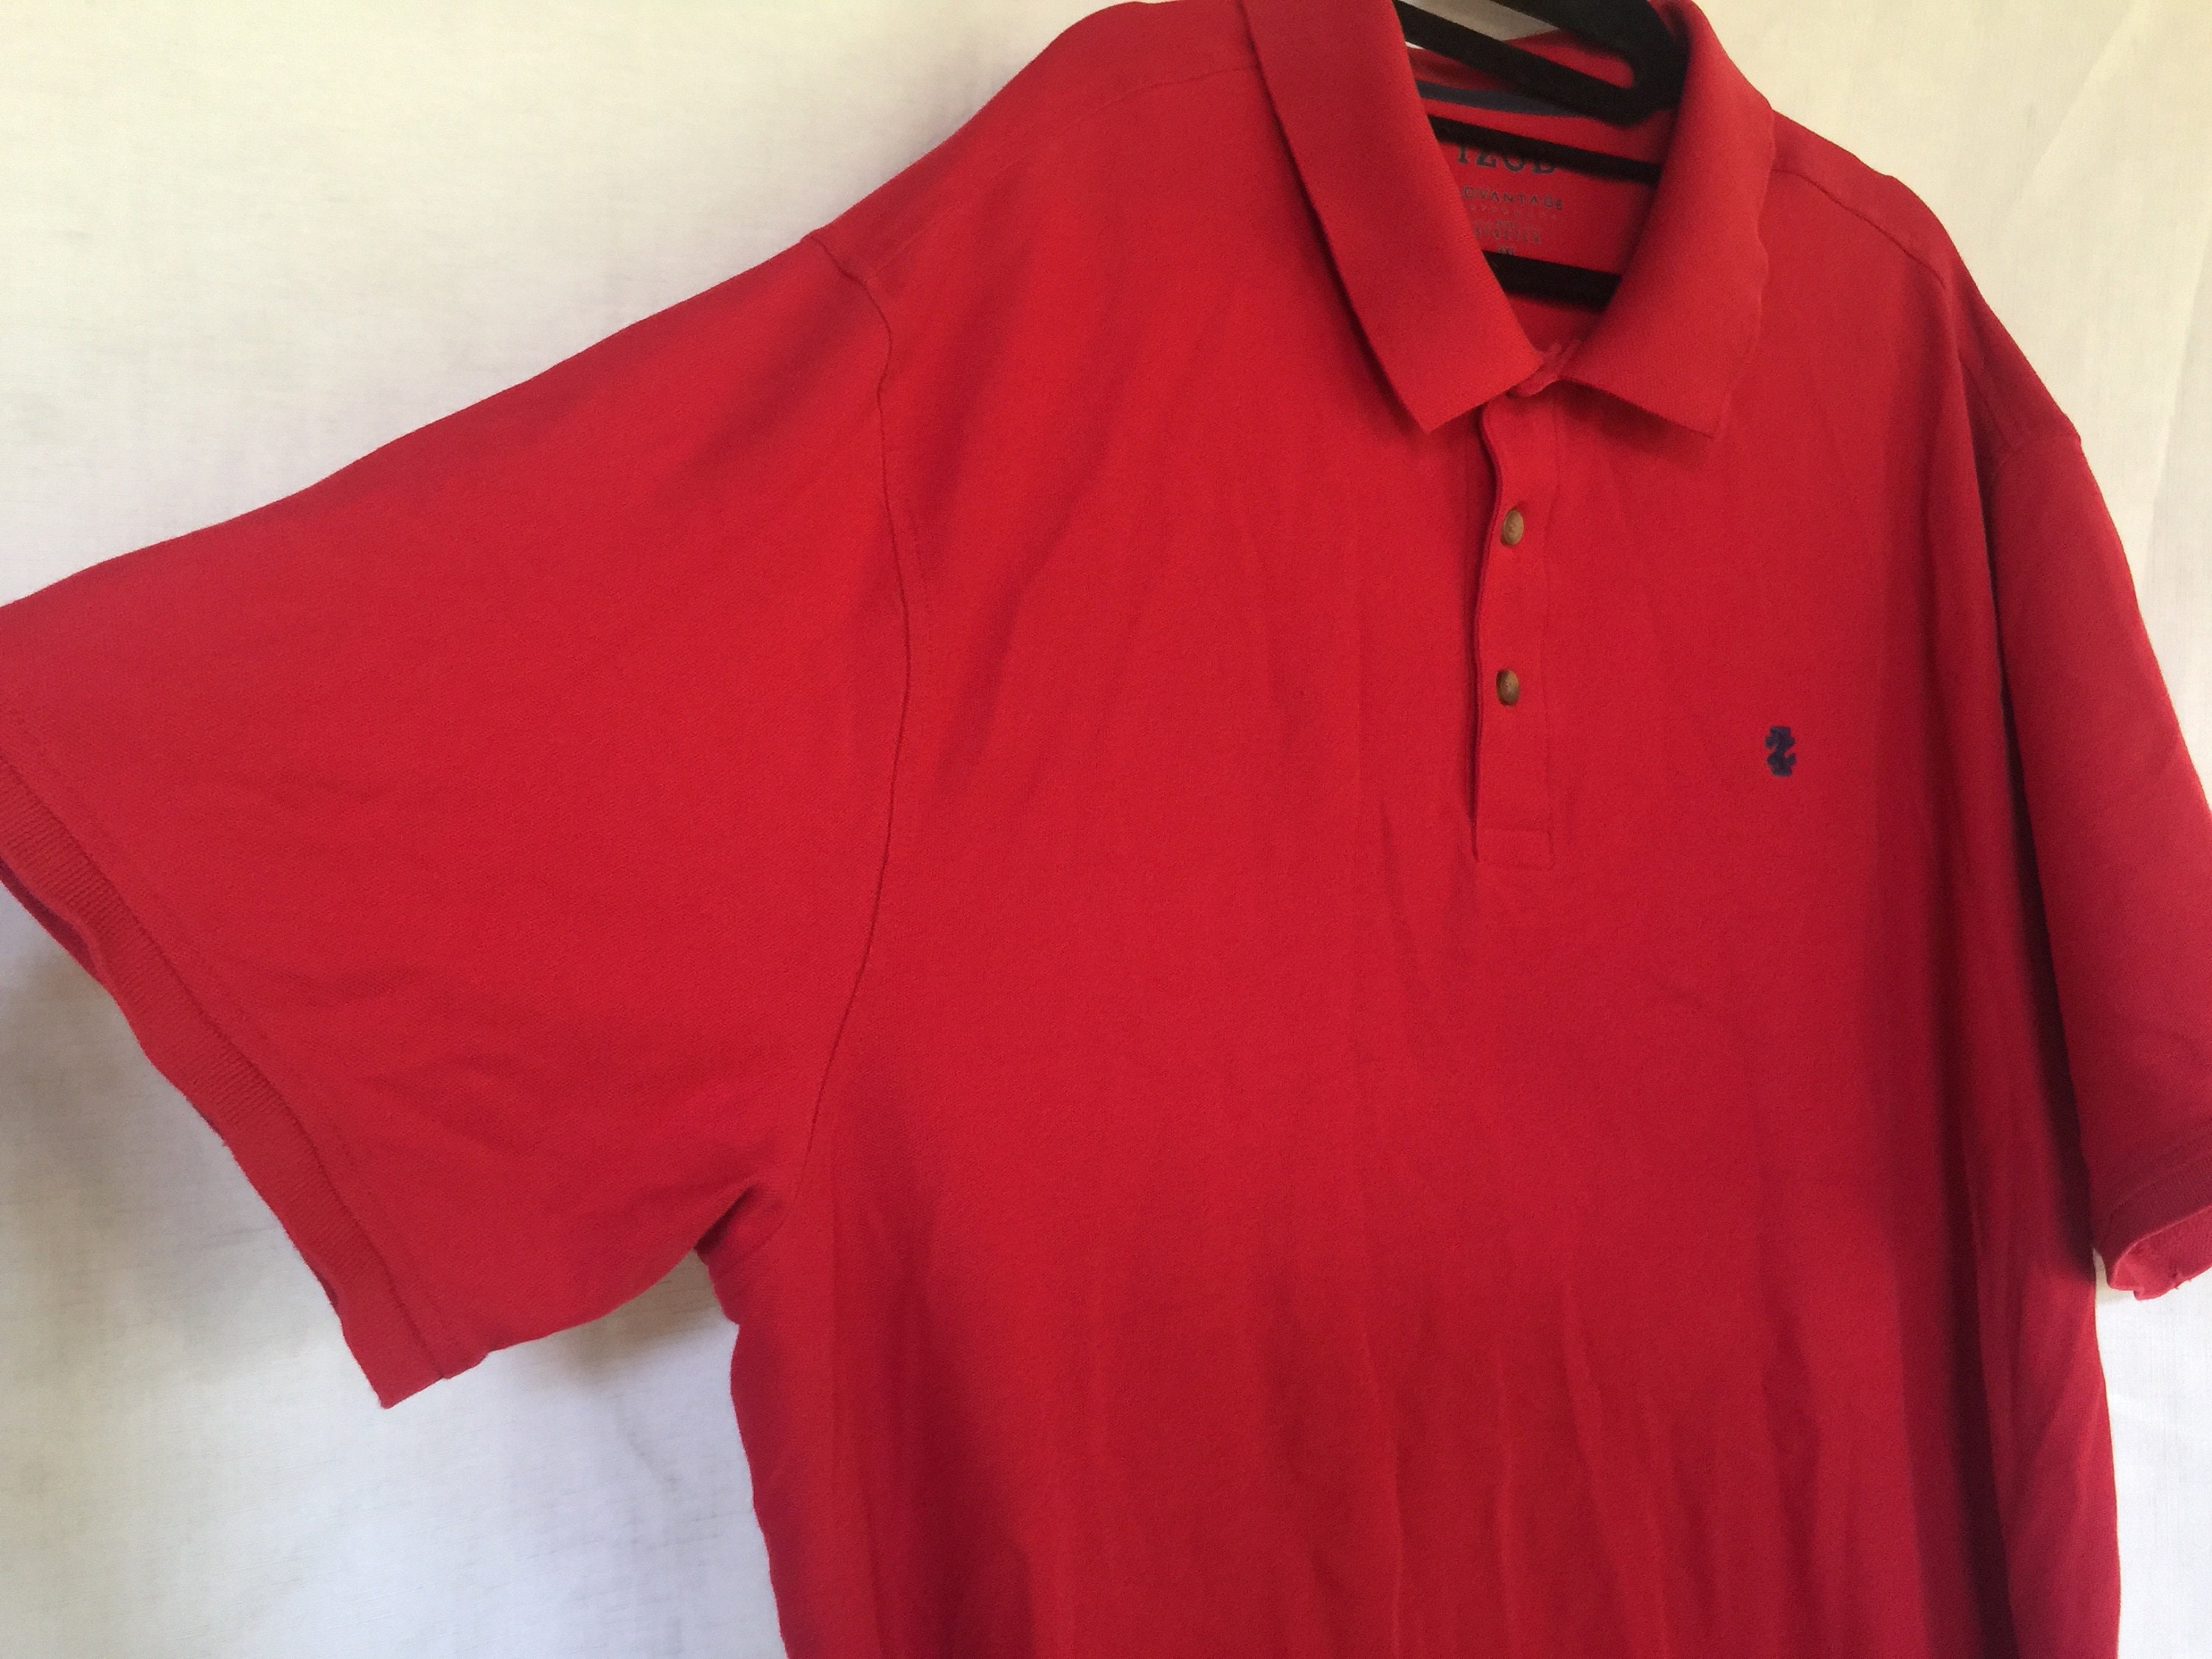 Men's 80s Shirt 3X Polo Shirt Izod Shirt Red Izod | Etsy